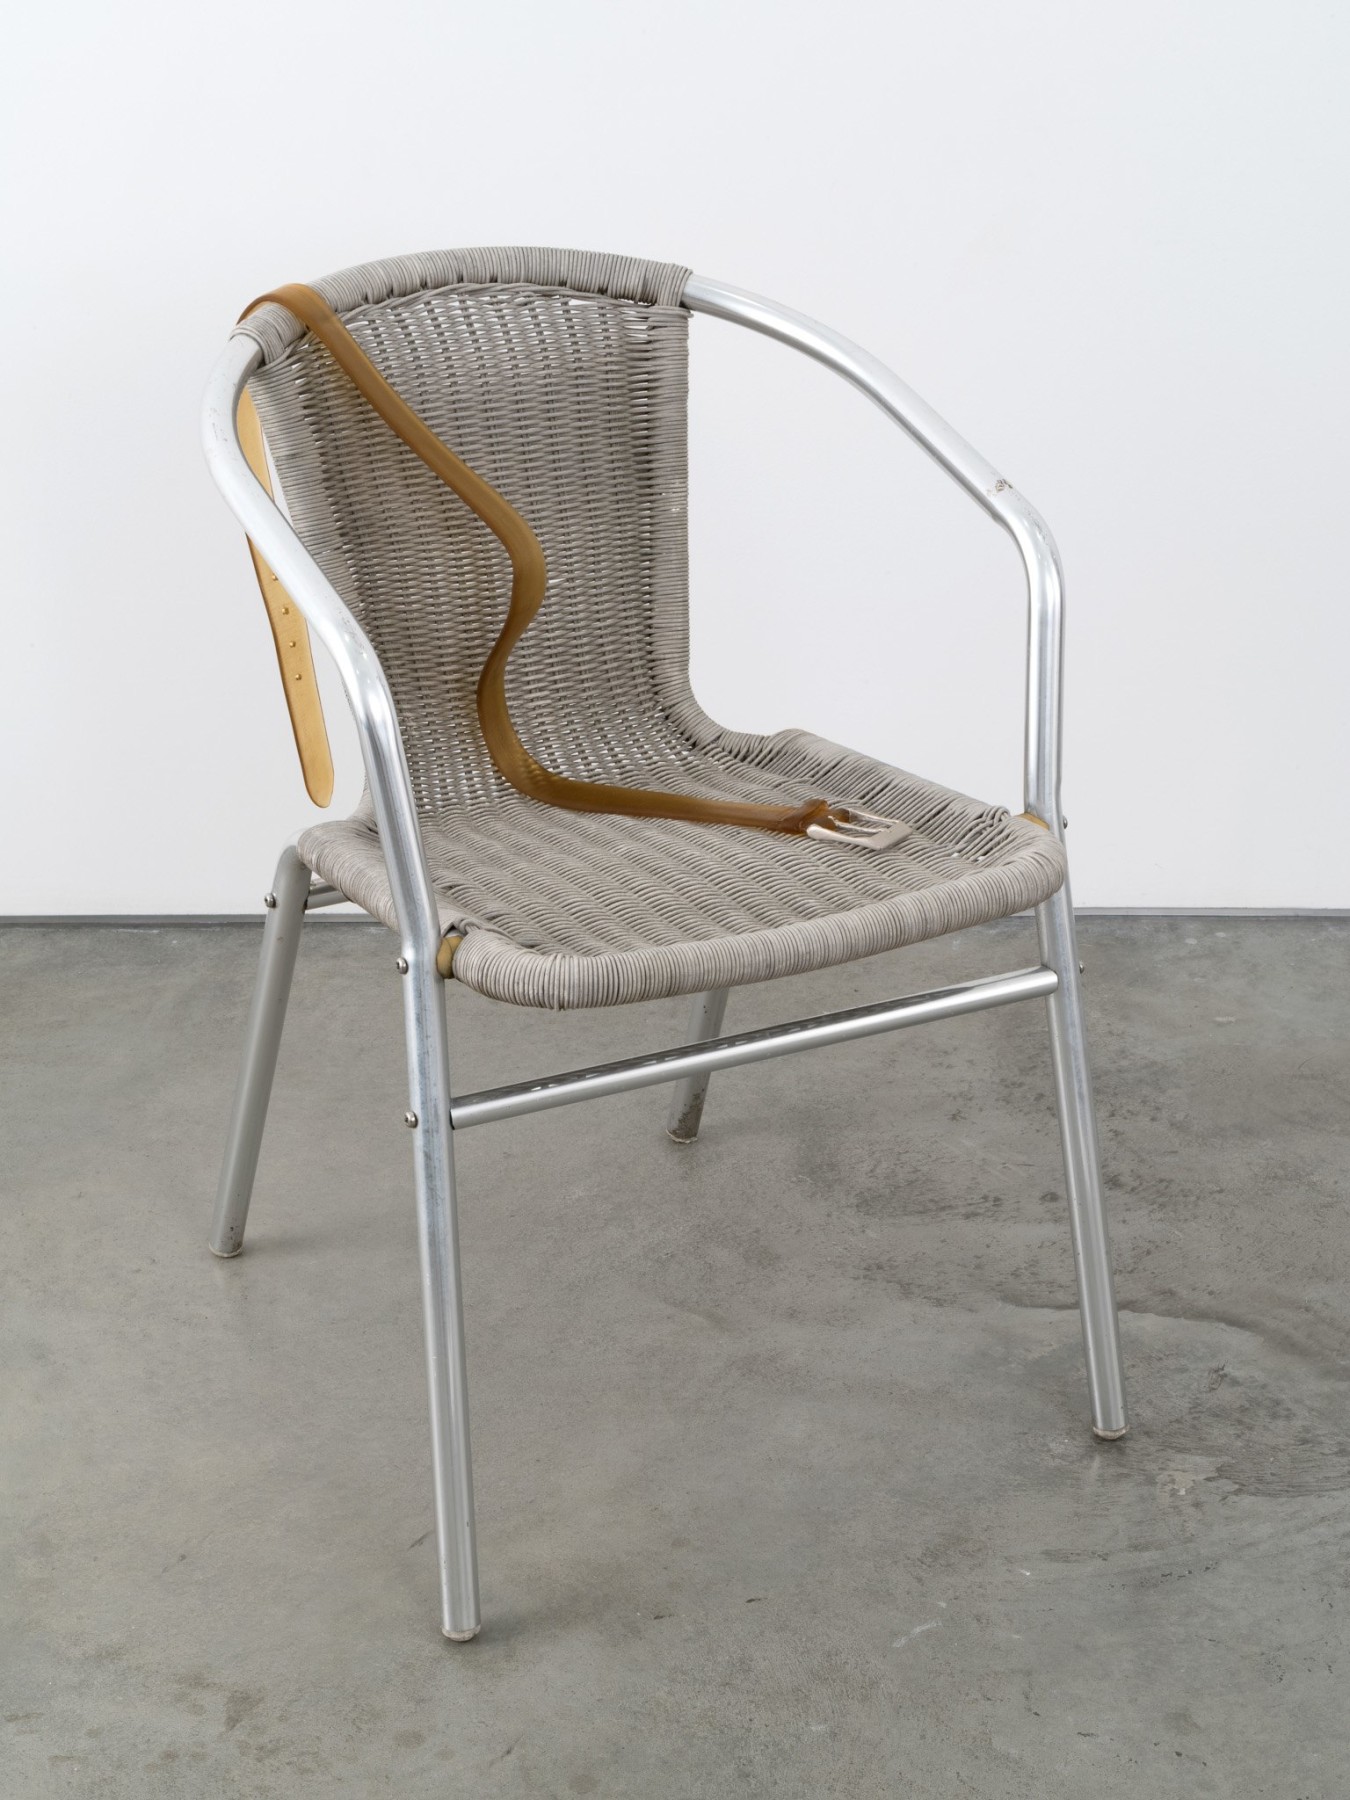 ￼￼Valentin Carron, Belt on braided chair, 2014